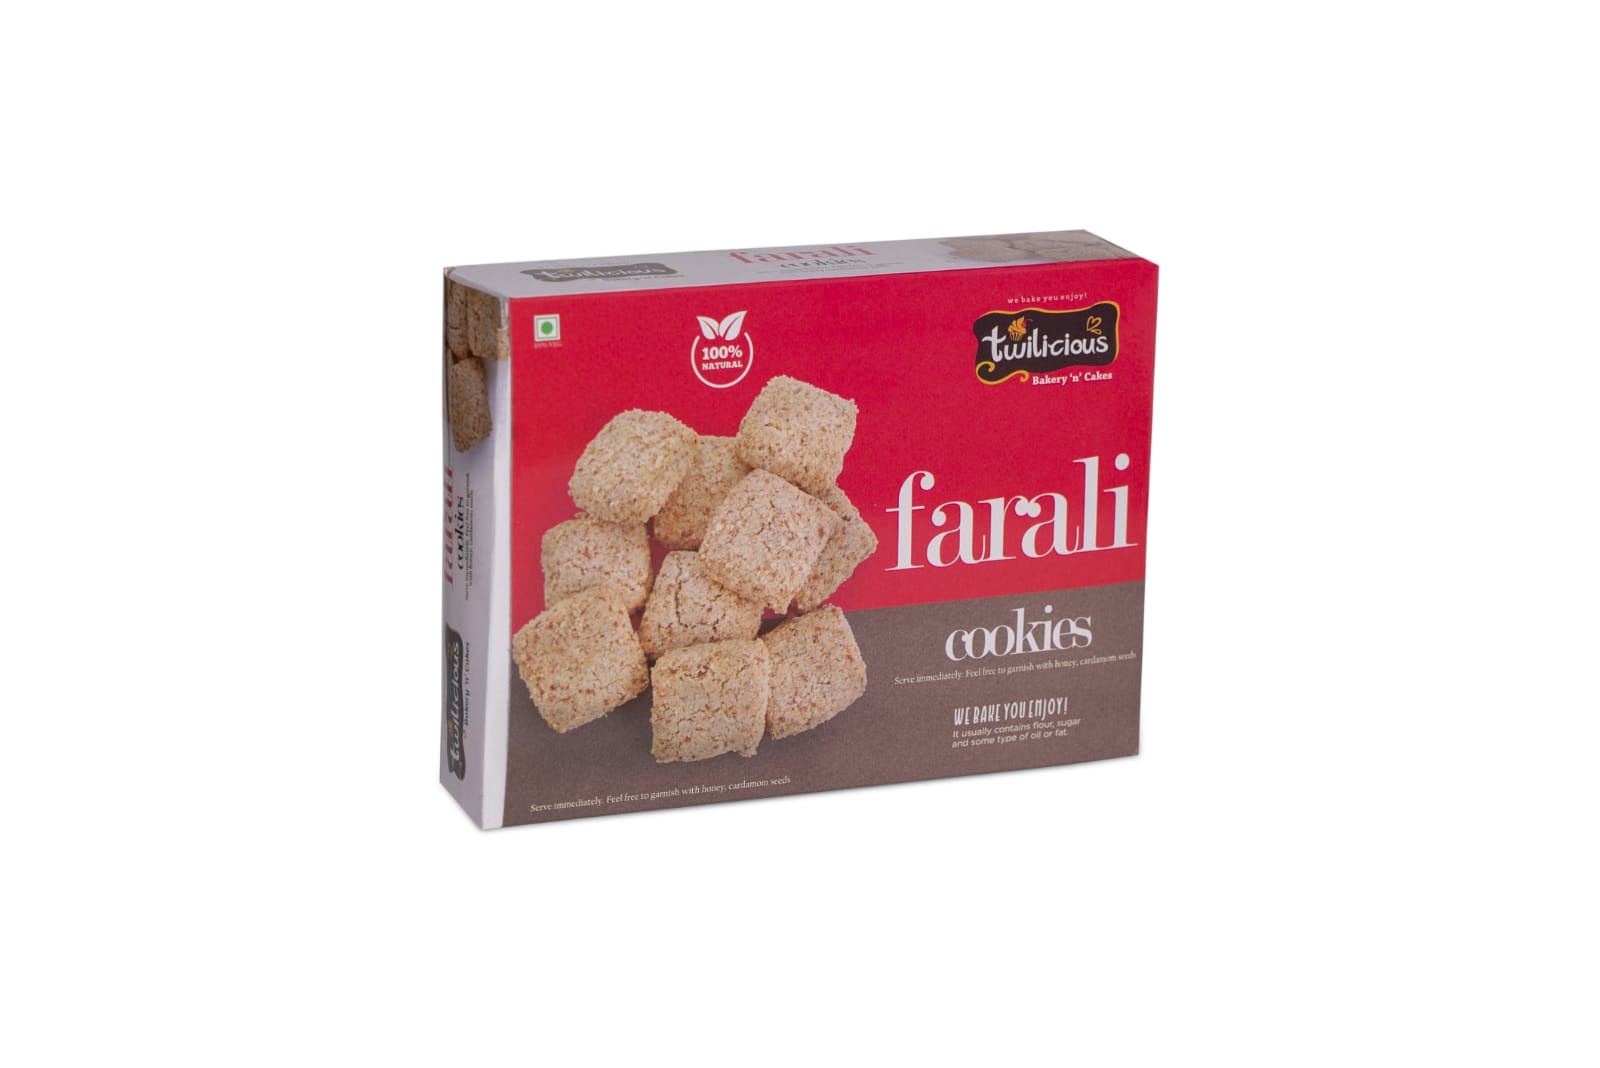 Twilicious Farali Cookies